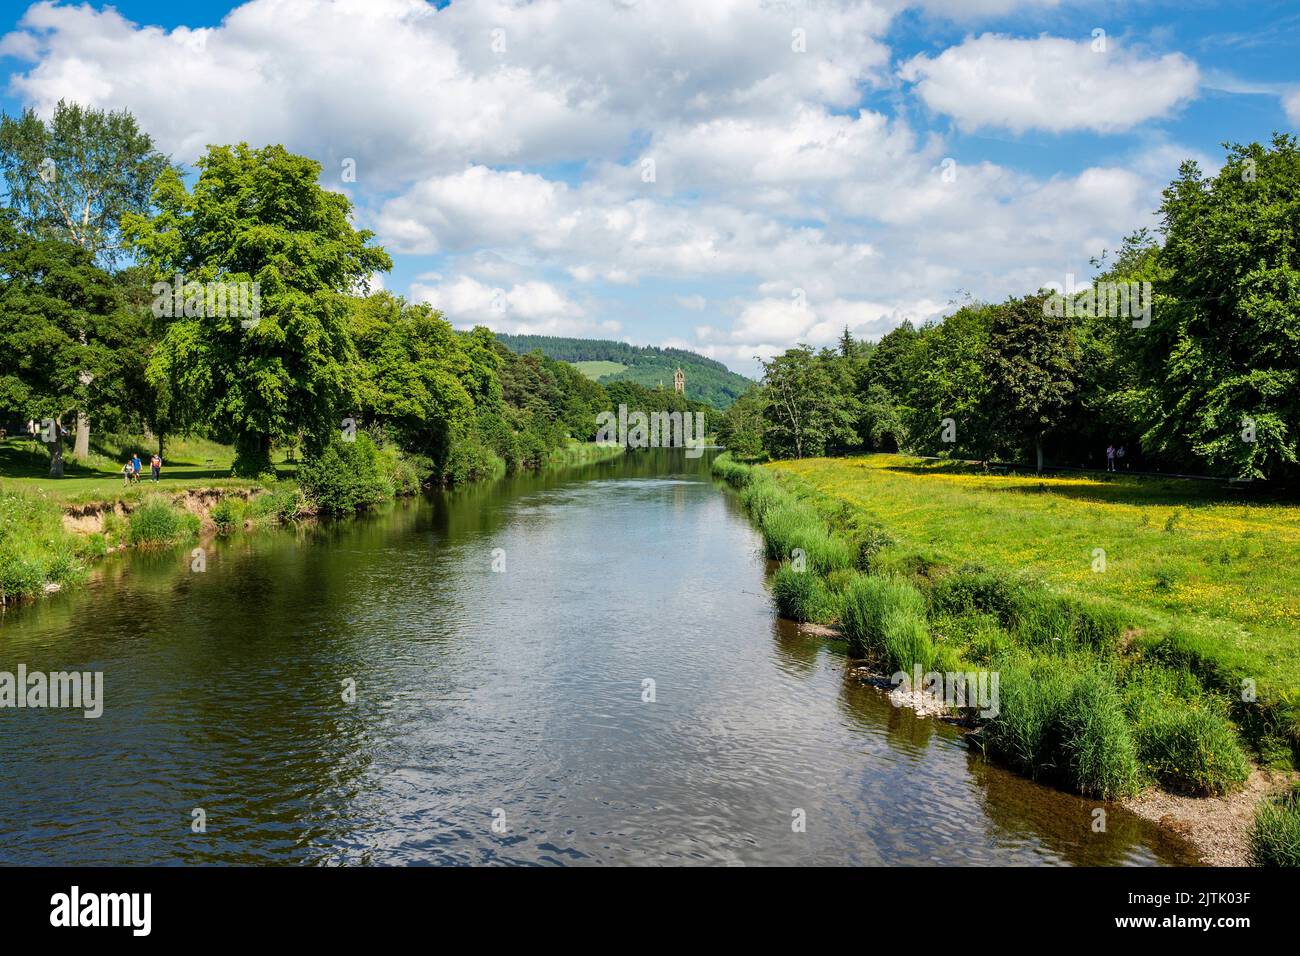 River Tweed, Hay Lodge Park, Peebles in the Scottish Borders, Scotland, UK Stock Photo